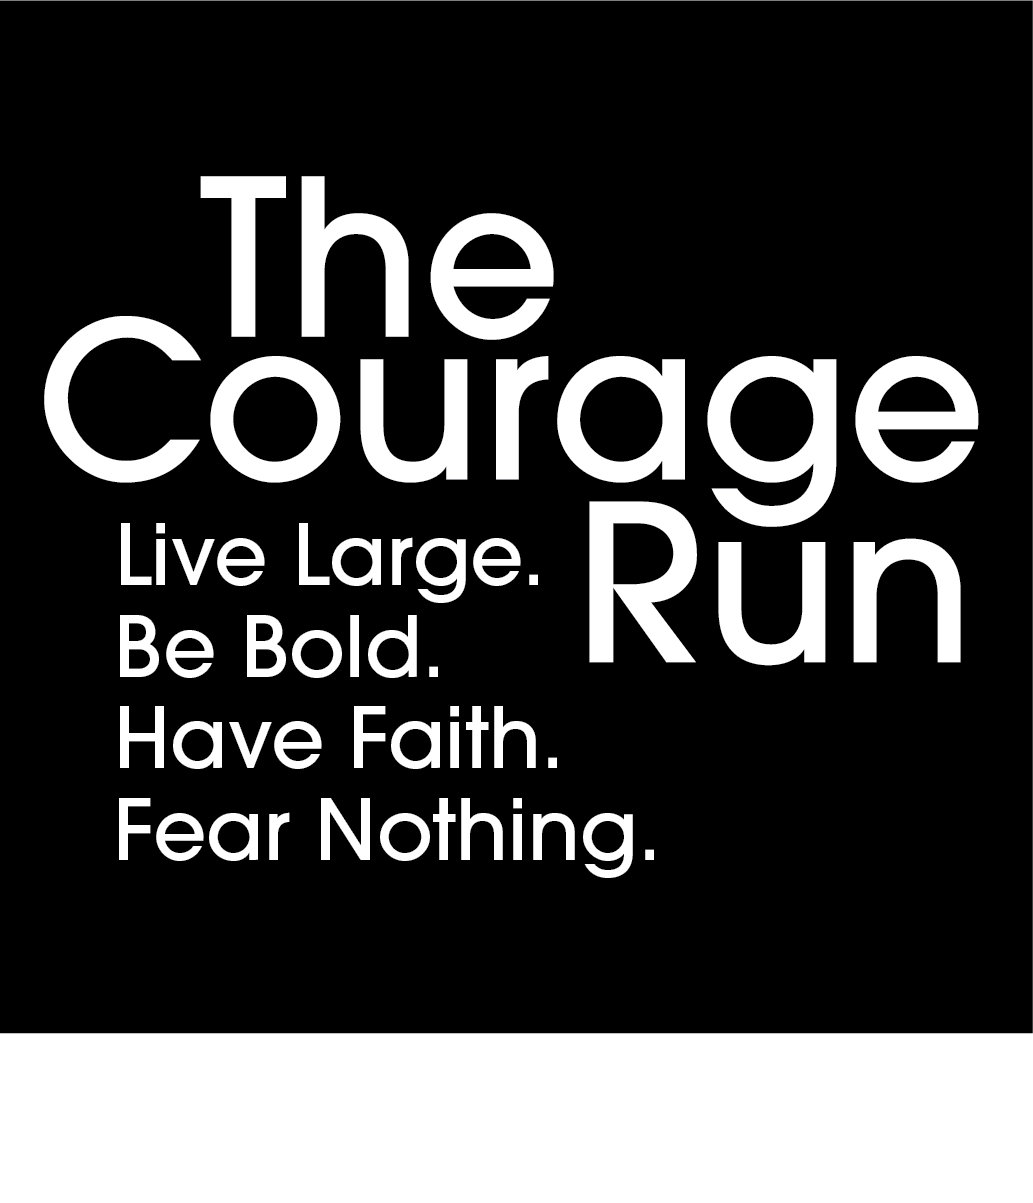 The Courage Run